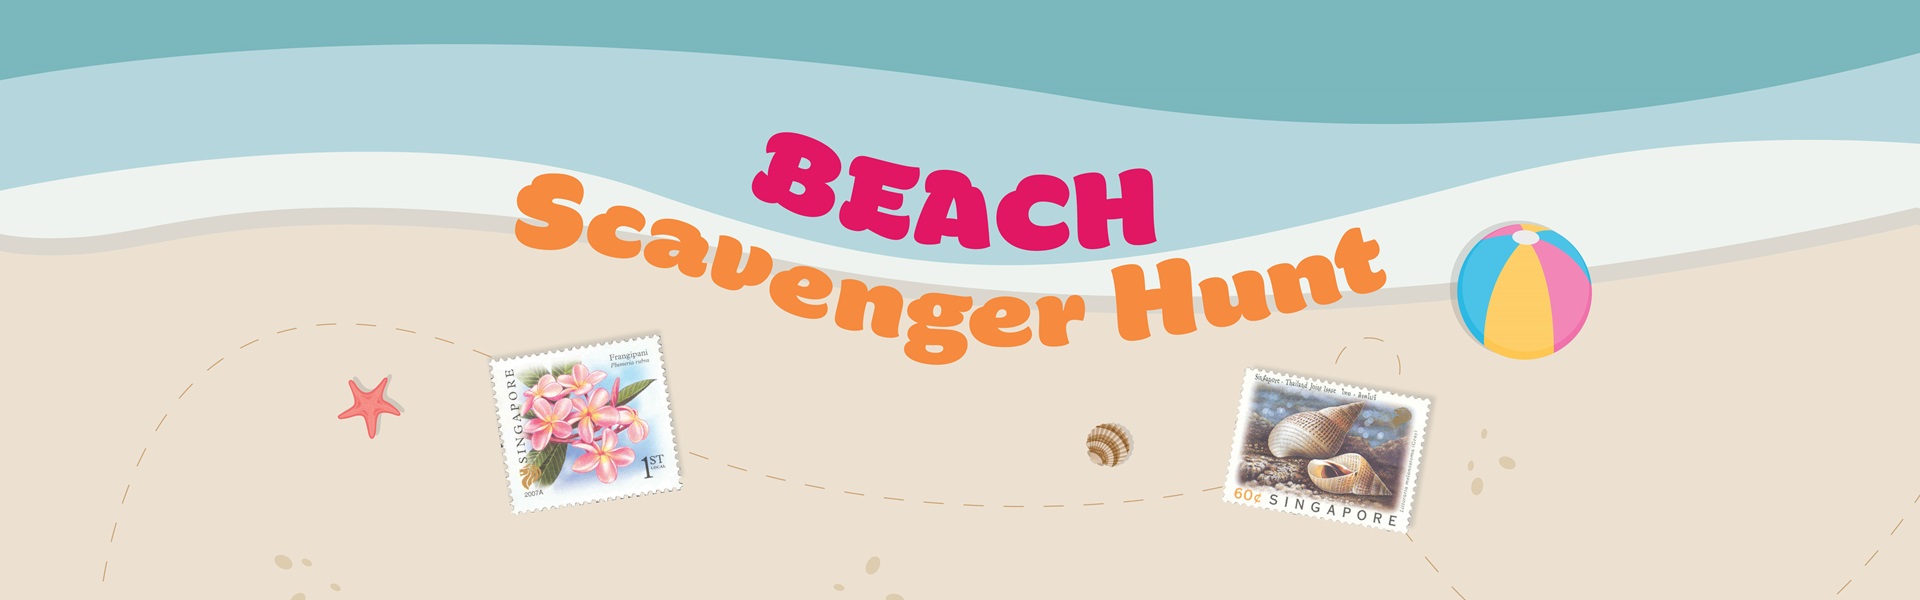 Beach Scavenger Hunt